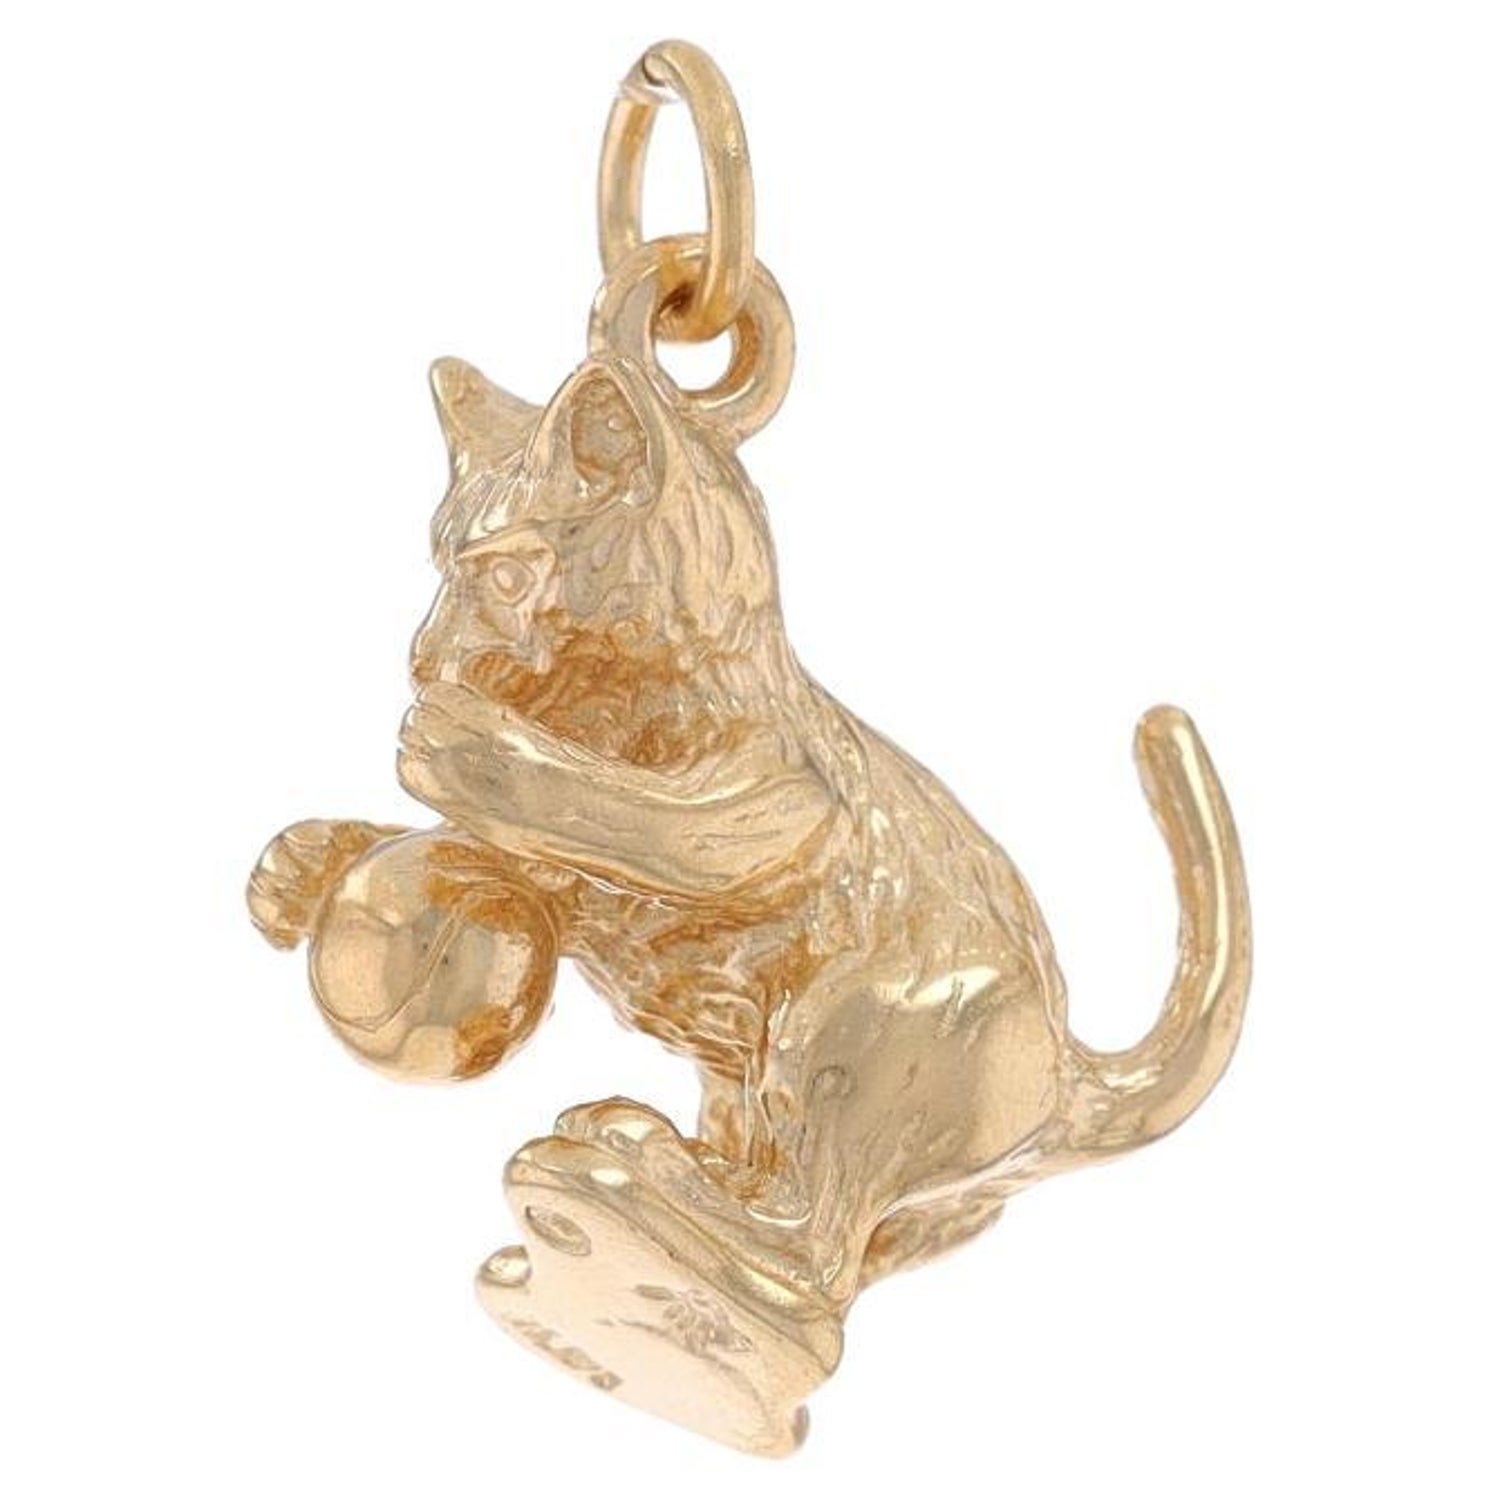 Yellow Gold Saint Bernard Dog Charm - 14k Alpine Rescue Canine Pet - Wilson  Brothers Jewelry